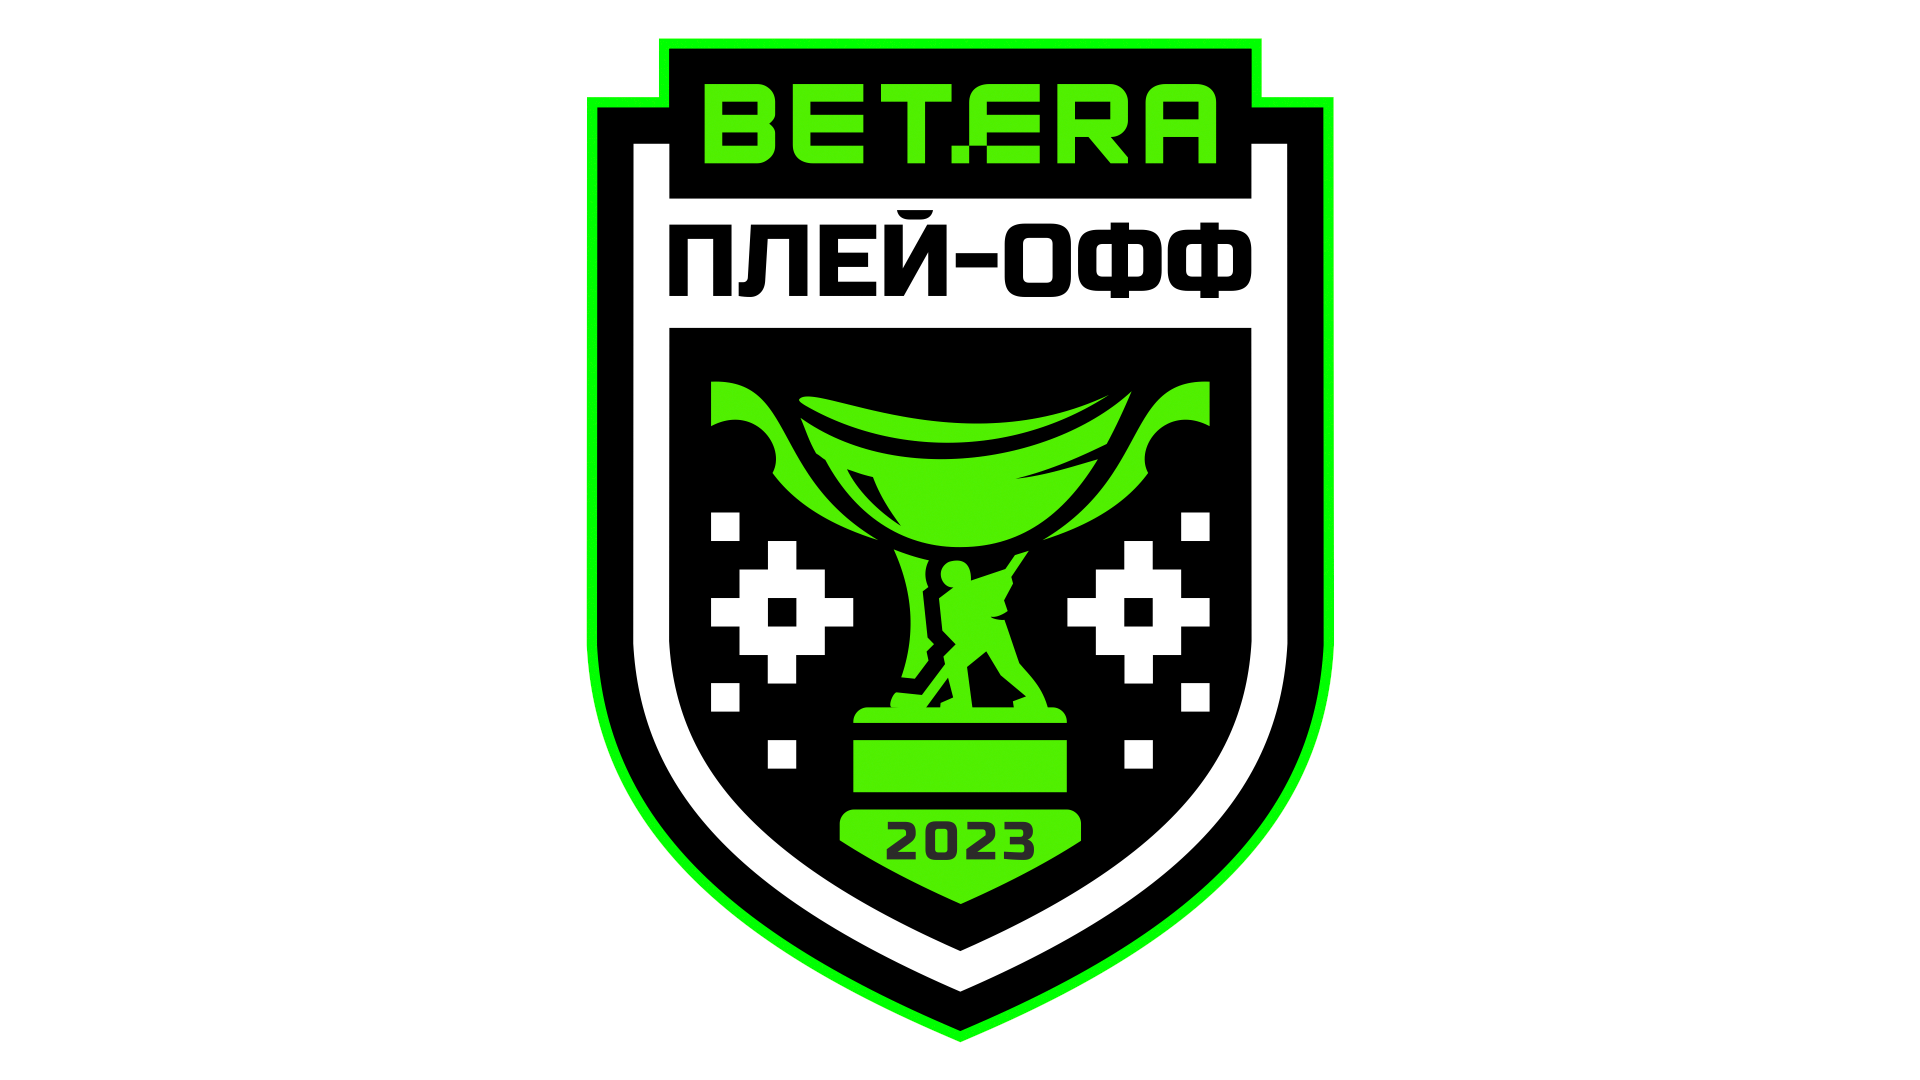 Экстралига Беларусь. КХЛ плей-офф 2023 логотип. Плей-офф Адмирал логотип. Торпедо армейцы хоккей логотип.